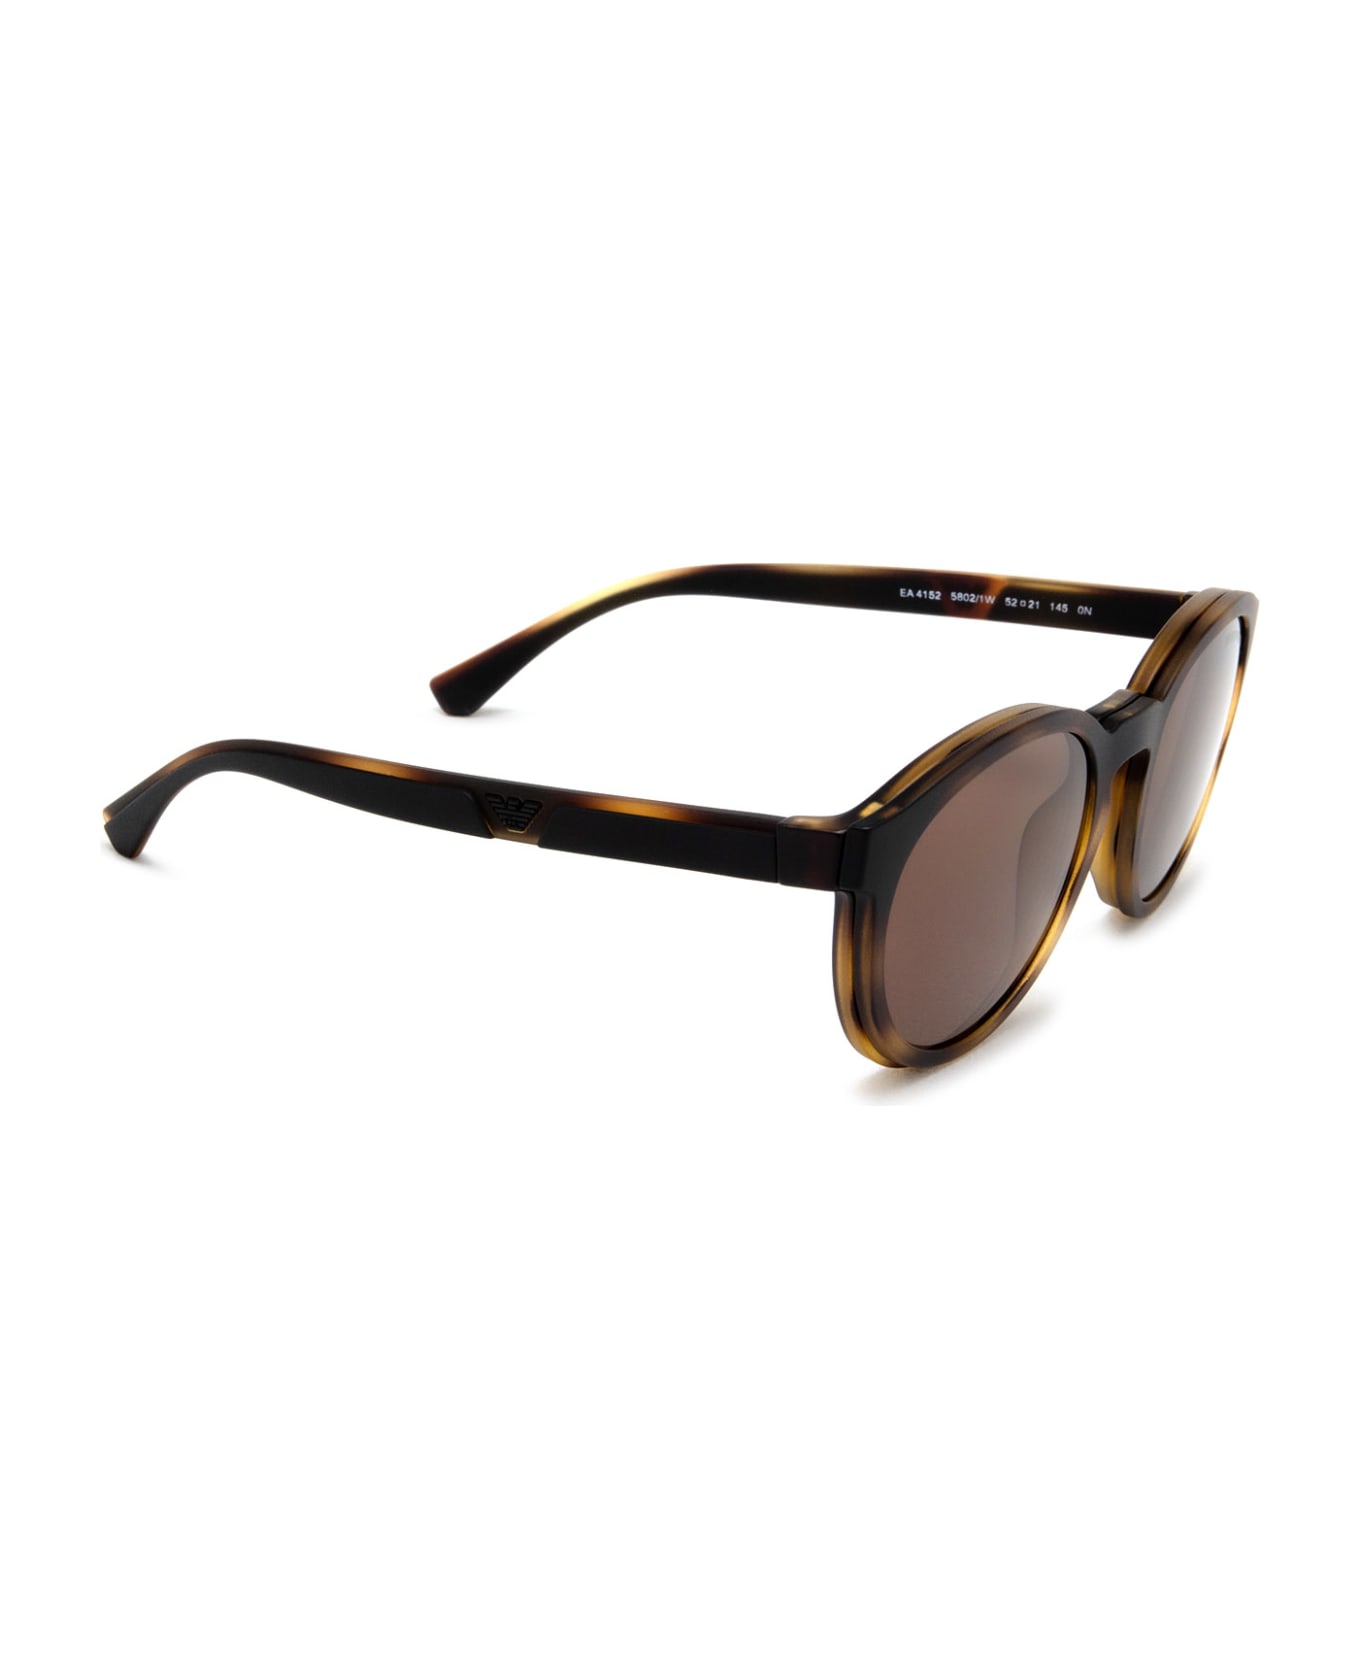 Emporio Armani Ea4152 Matte Havana Sunglasses - Matte Havana